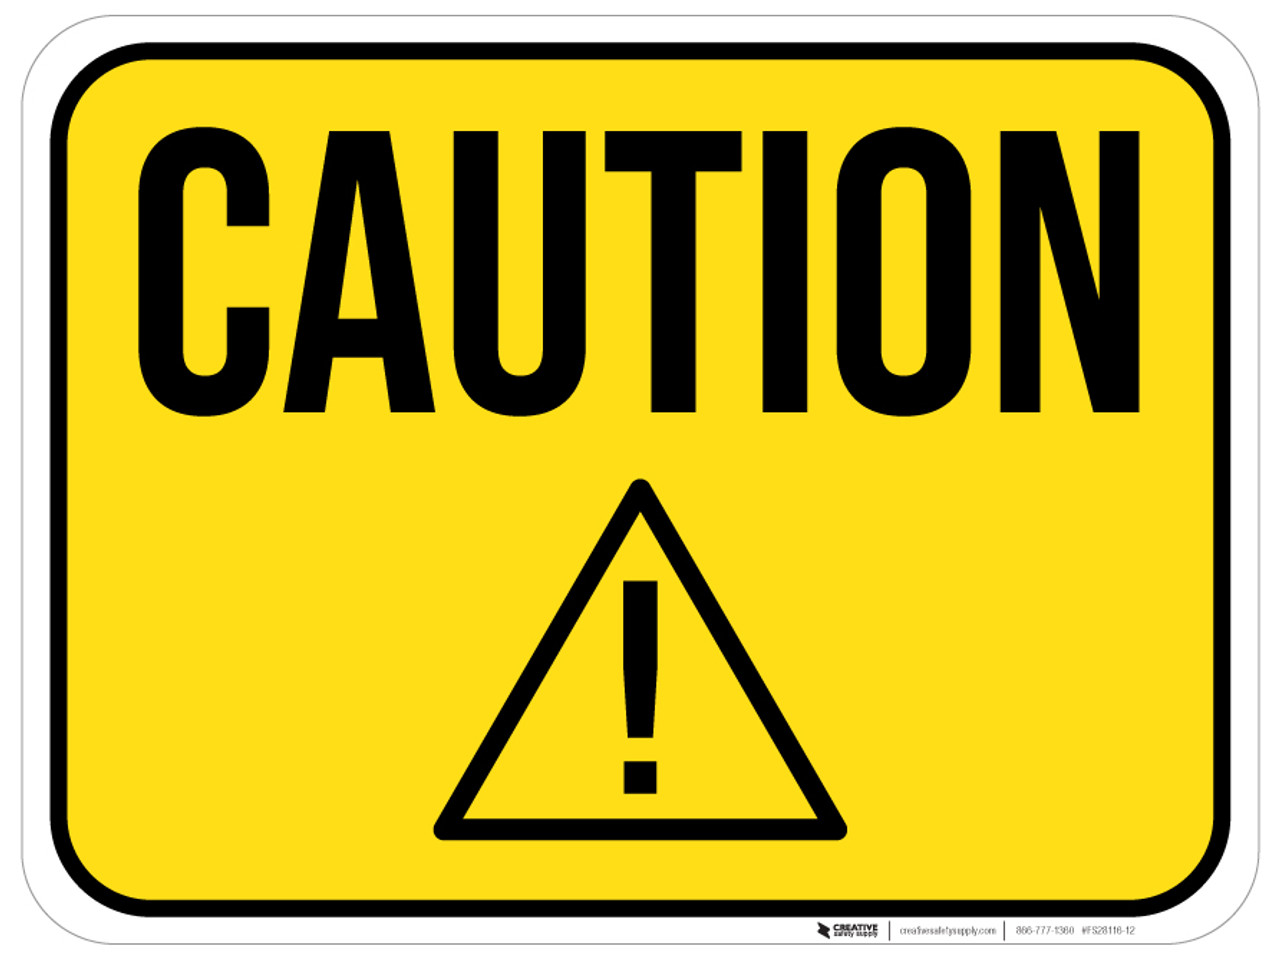 Caution Text with Hazard Symbol - Floor Sign